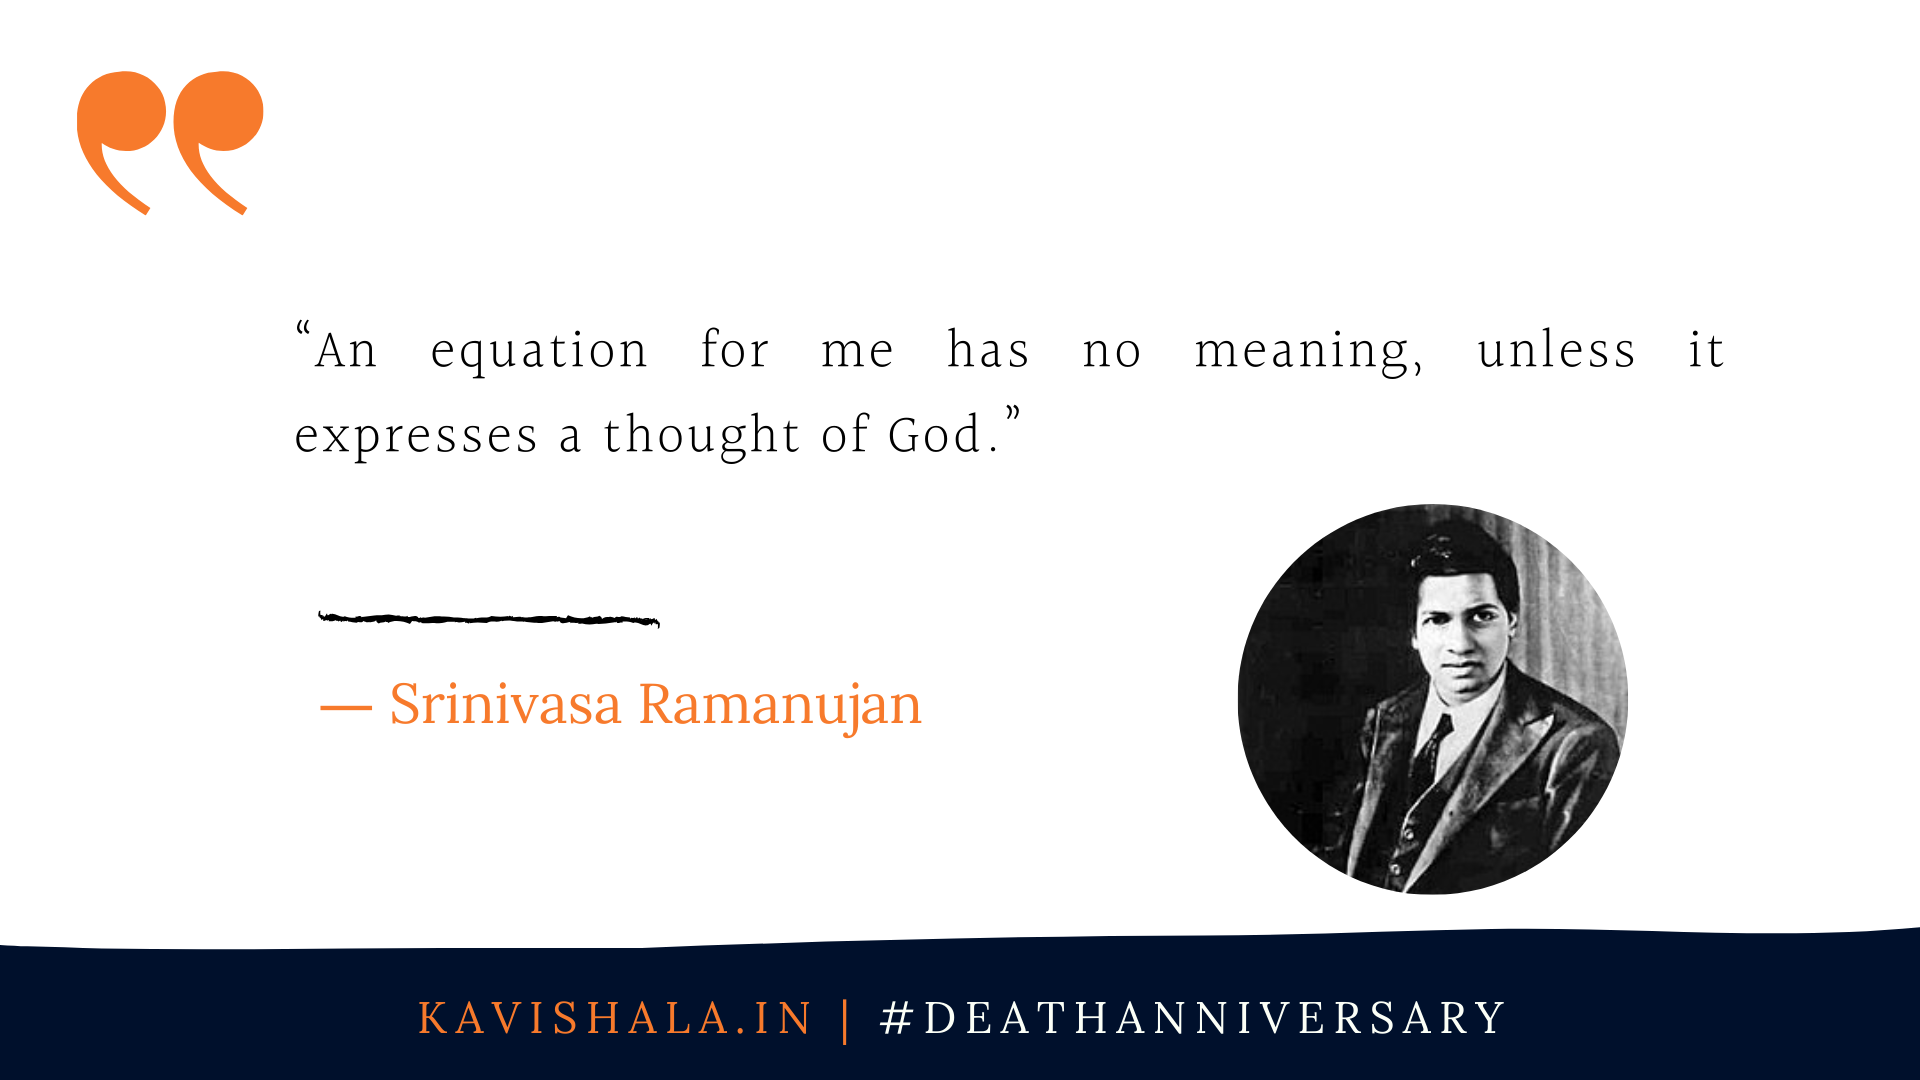 Quotes | Srinivasa Ramanujan's image